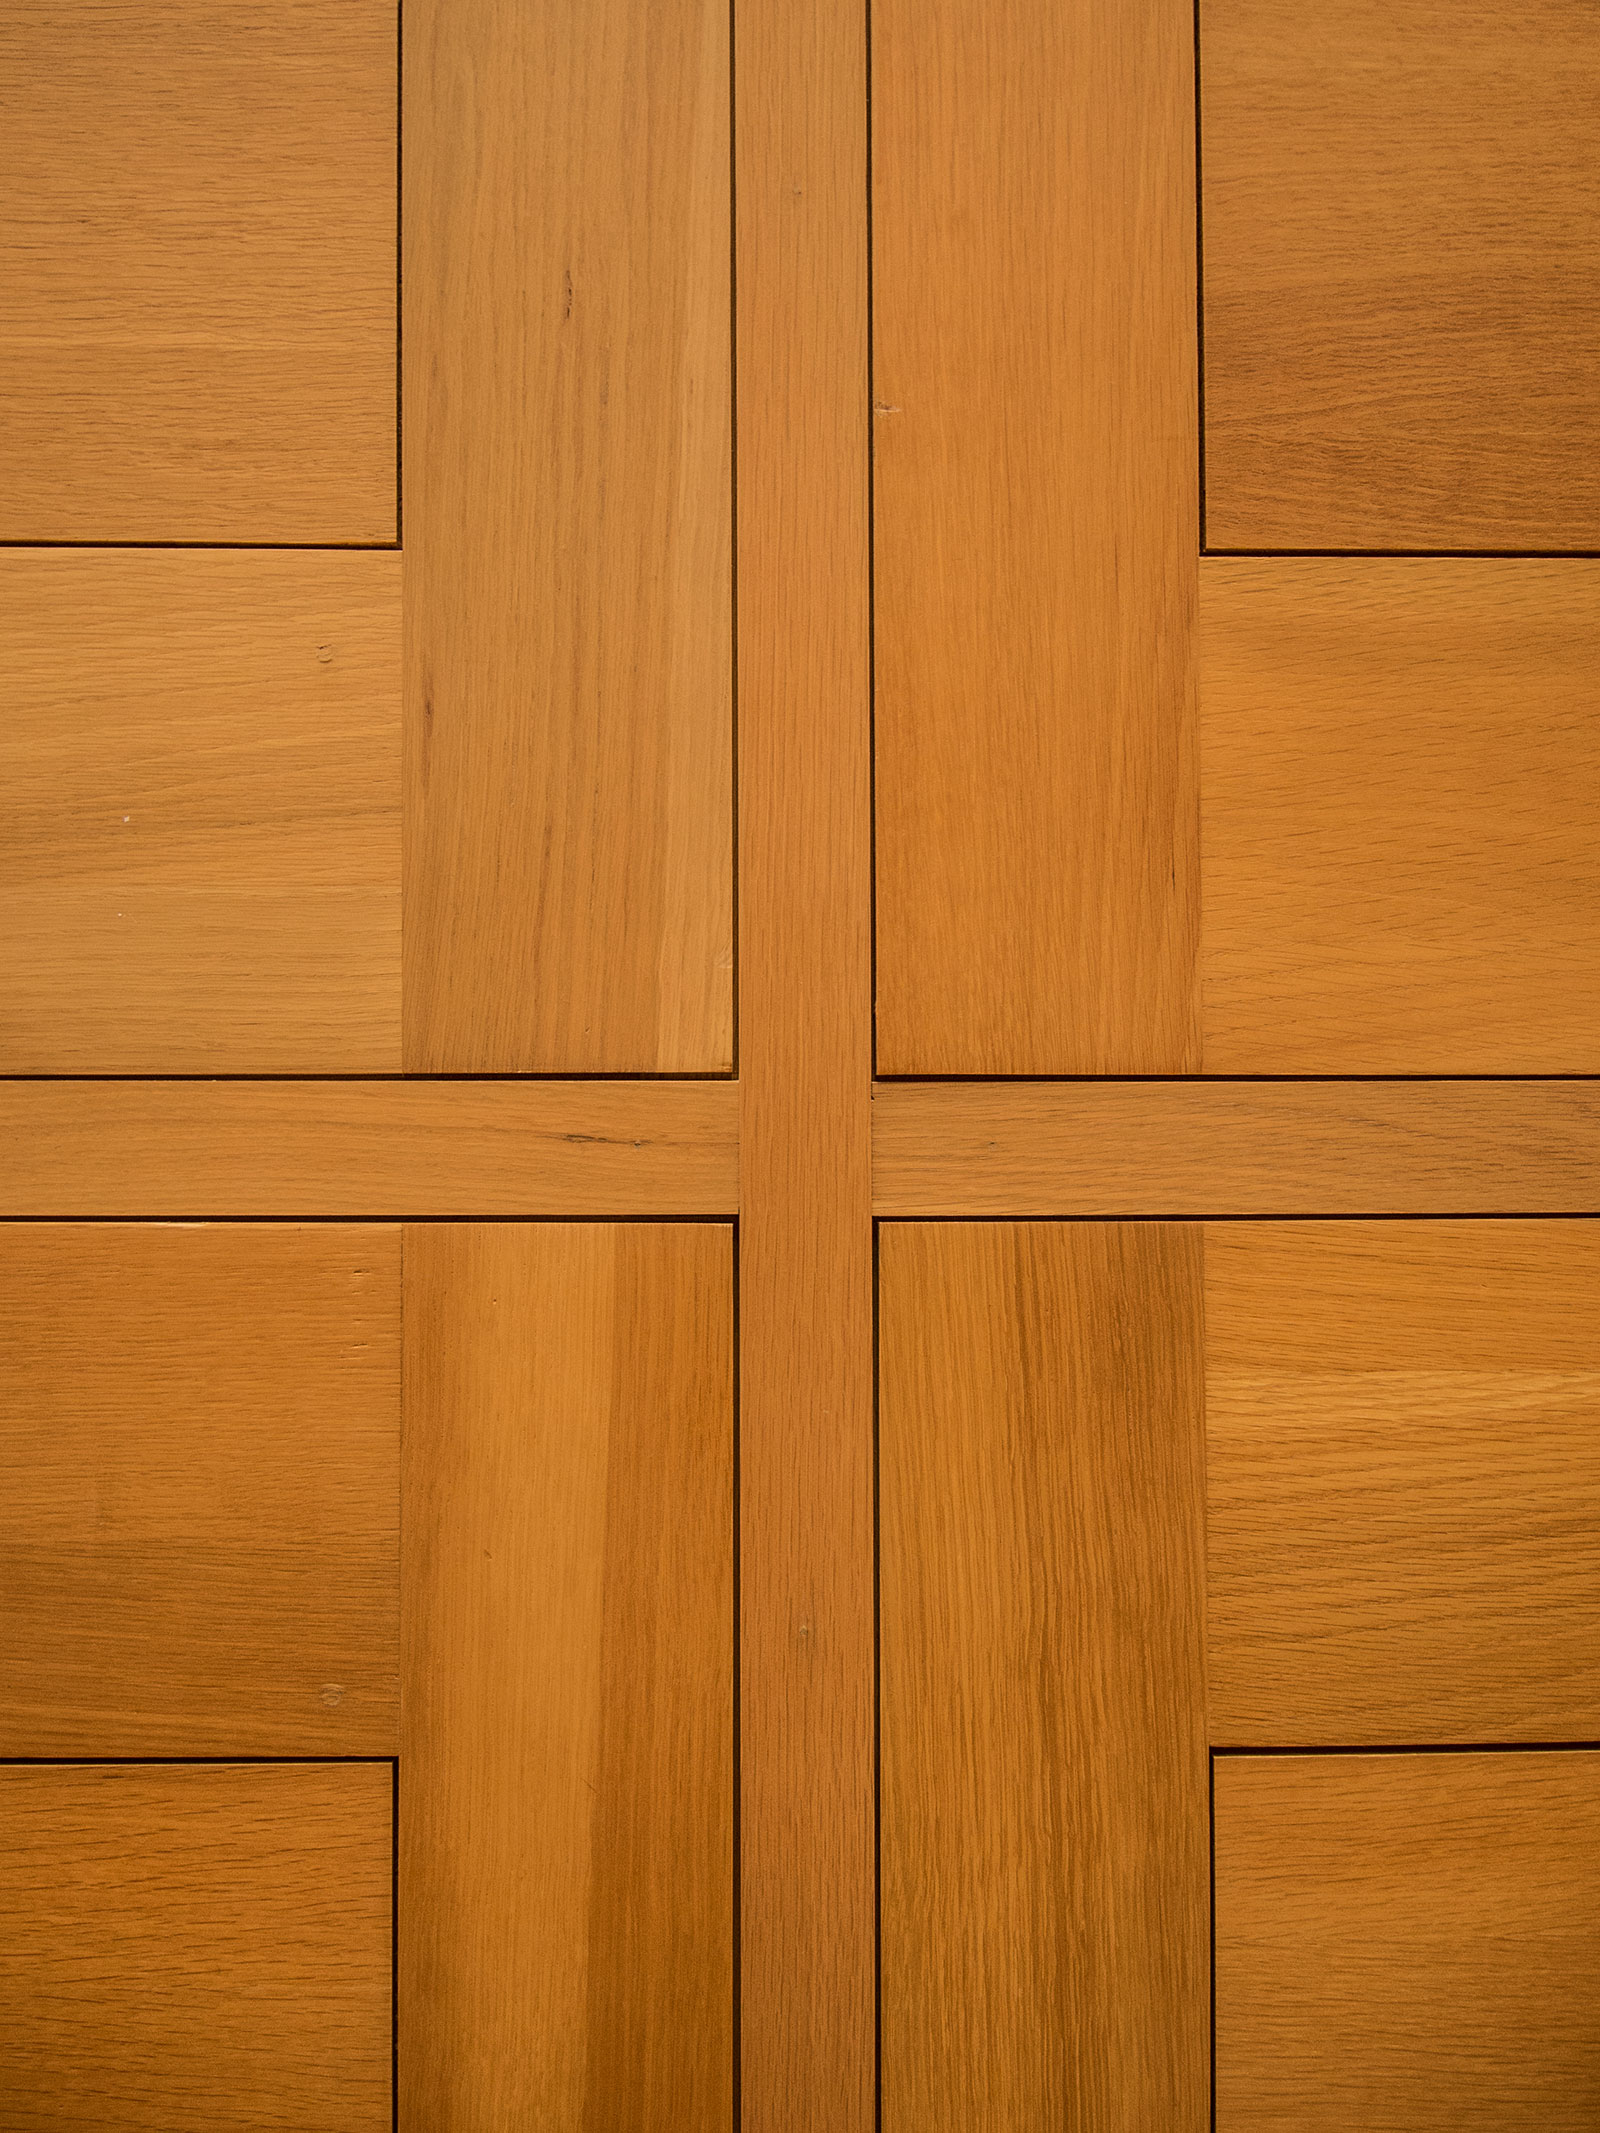 Wood details - Yale Center for British Art / Louis Kahn